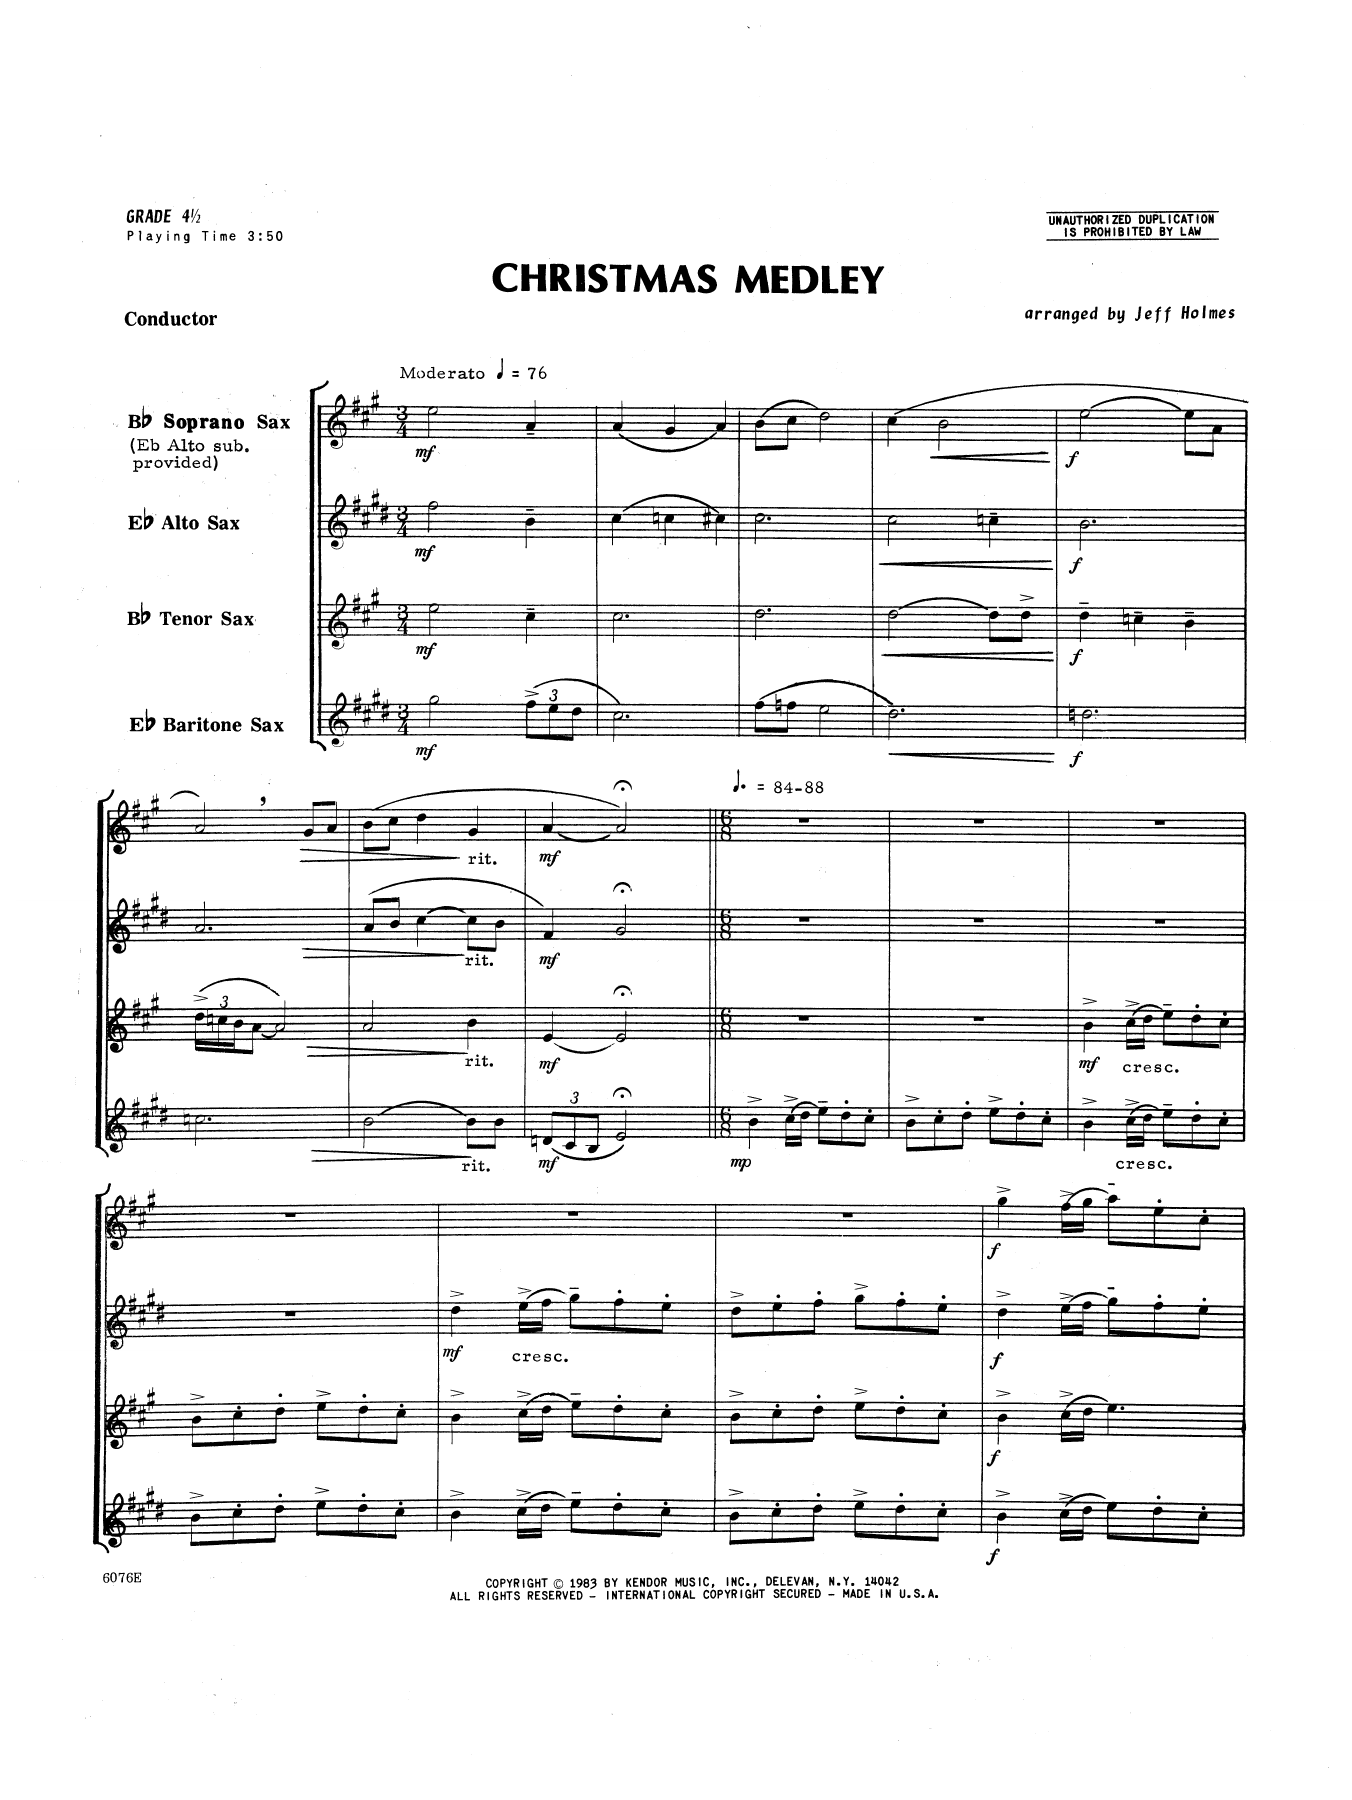 Download Holmes Christmas Medley - Full Score Sheet Music